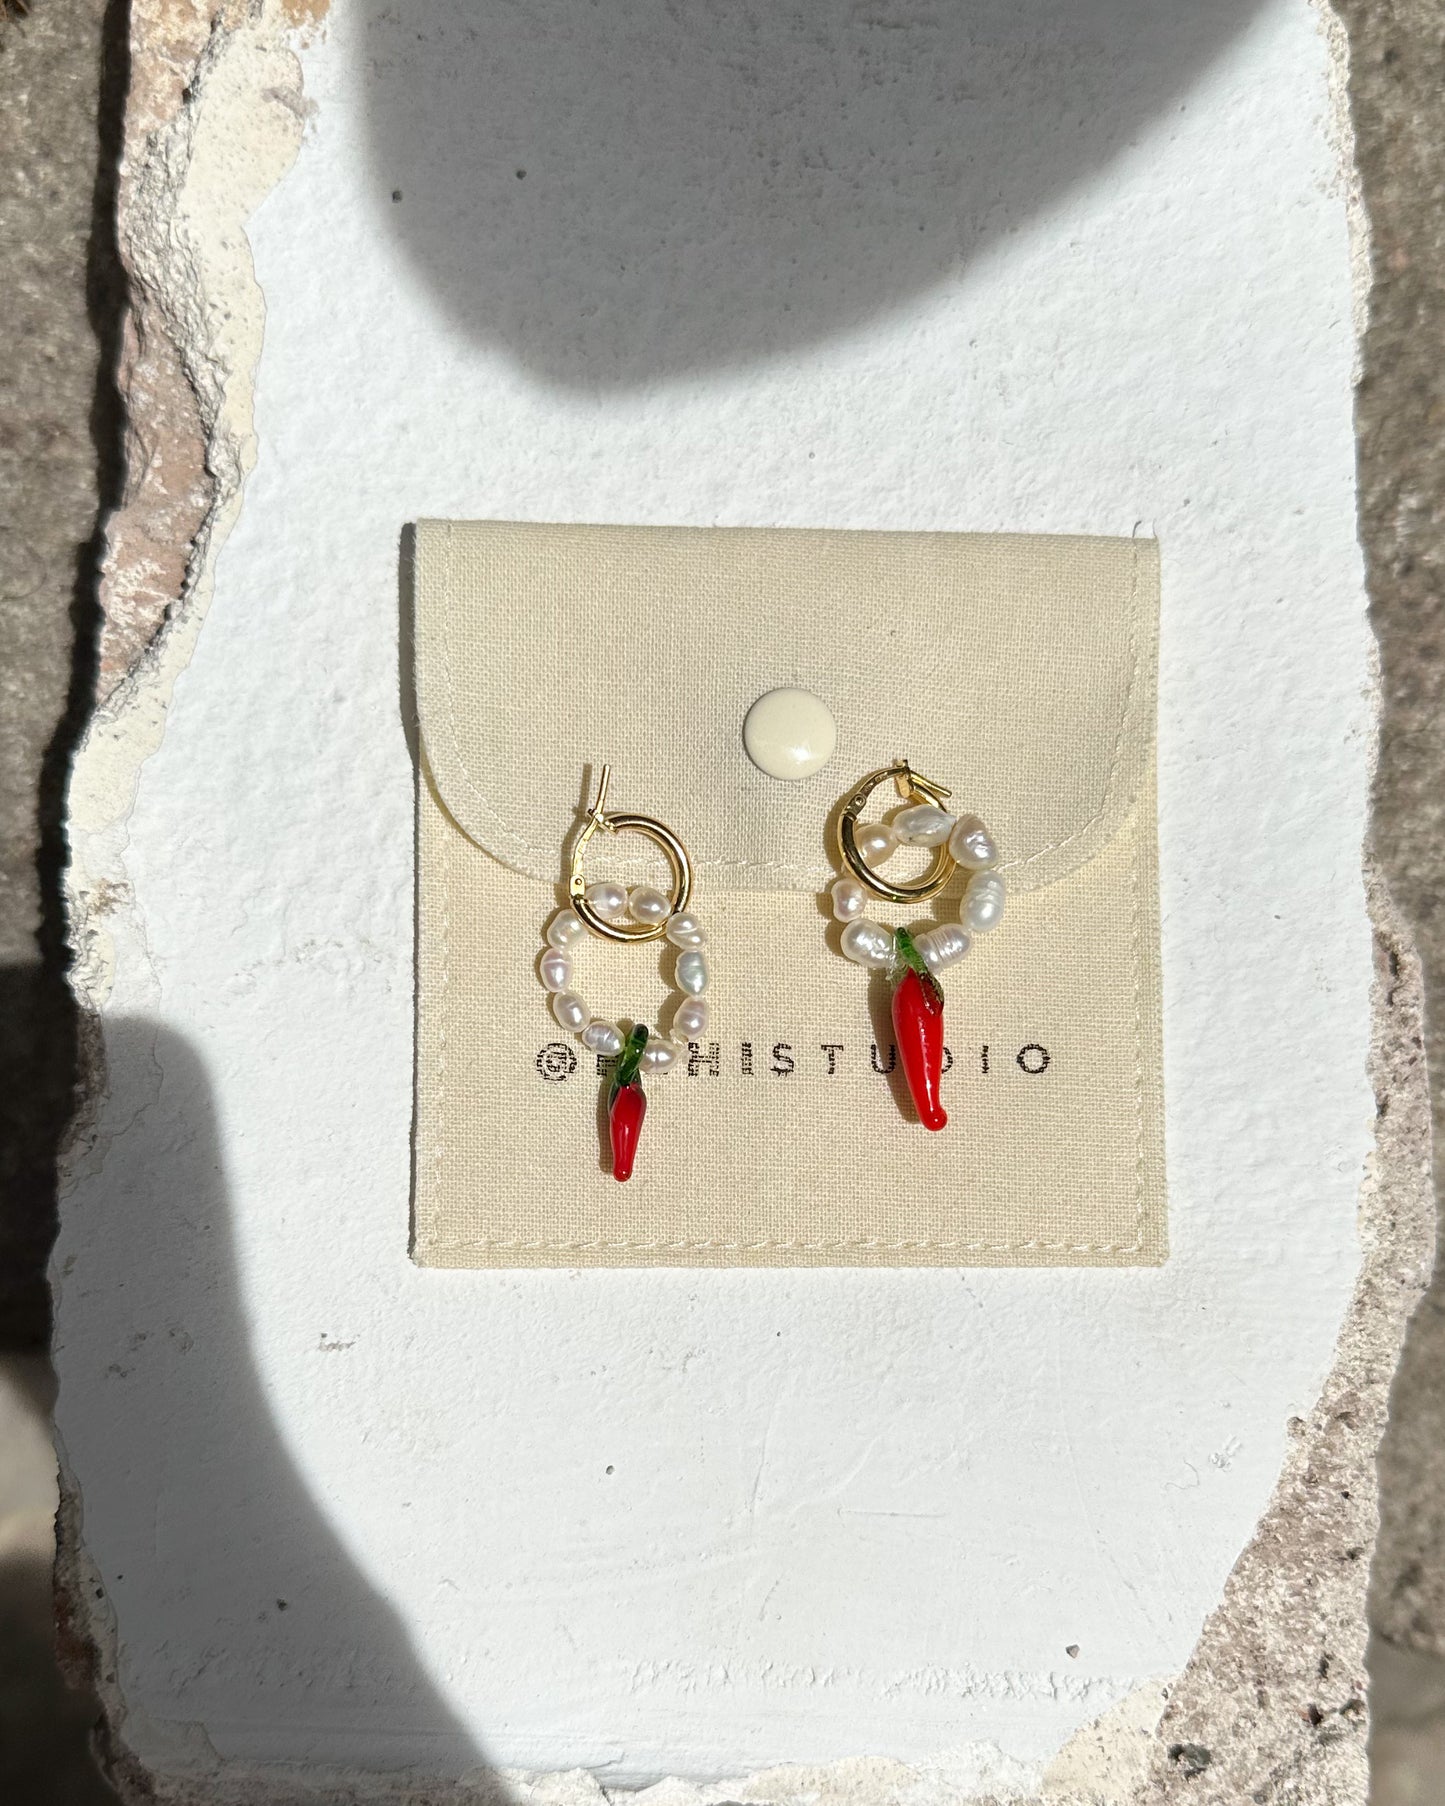 Pearls and chili hoop earrings.